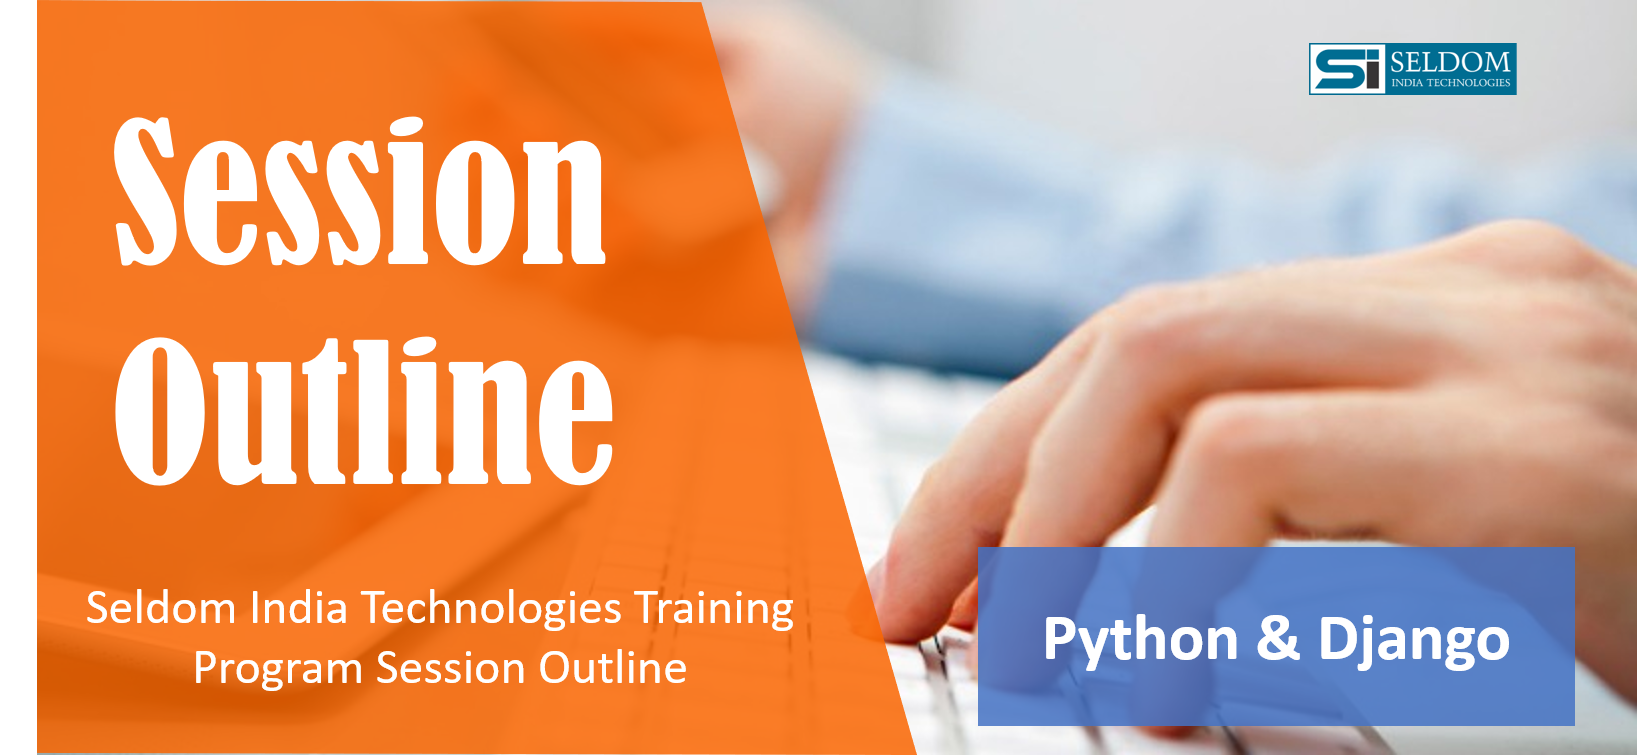 Python Django Session Outline